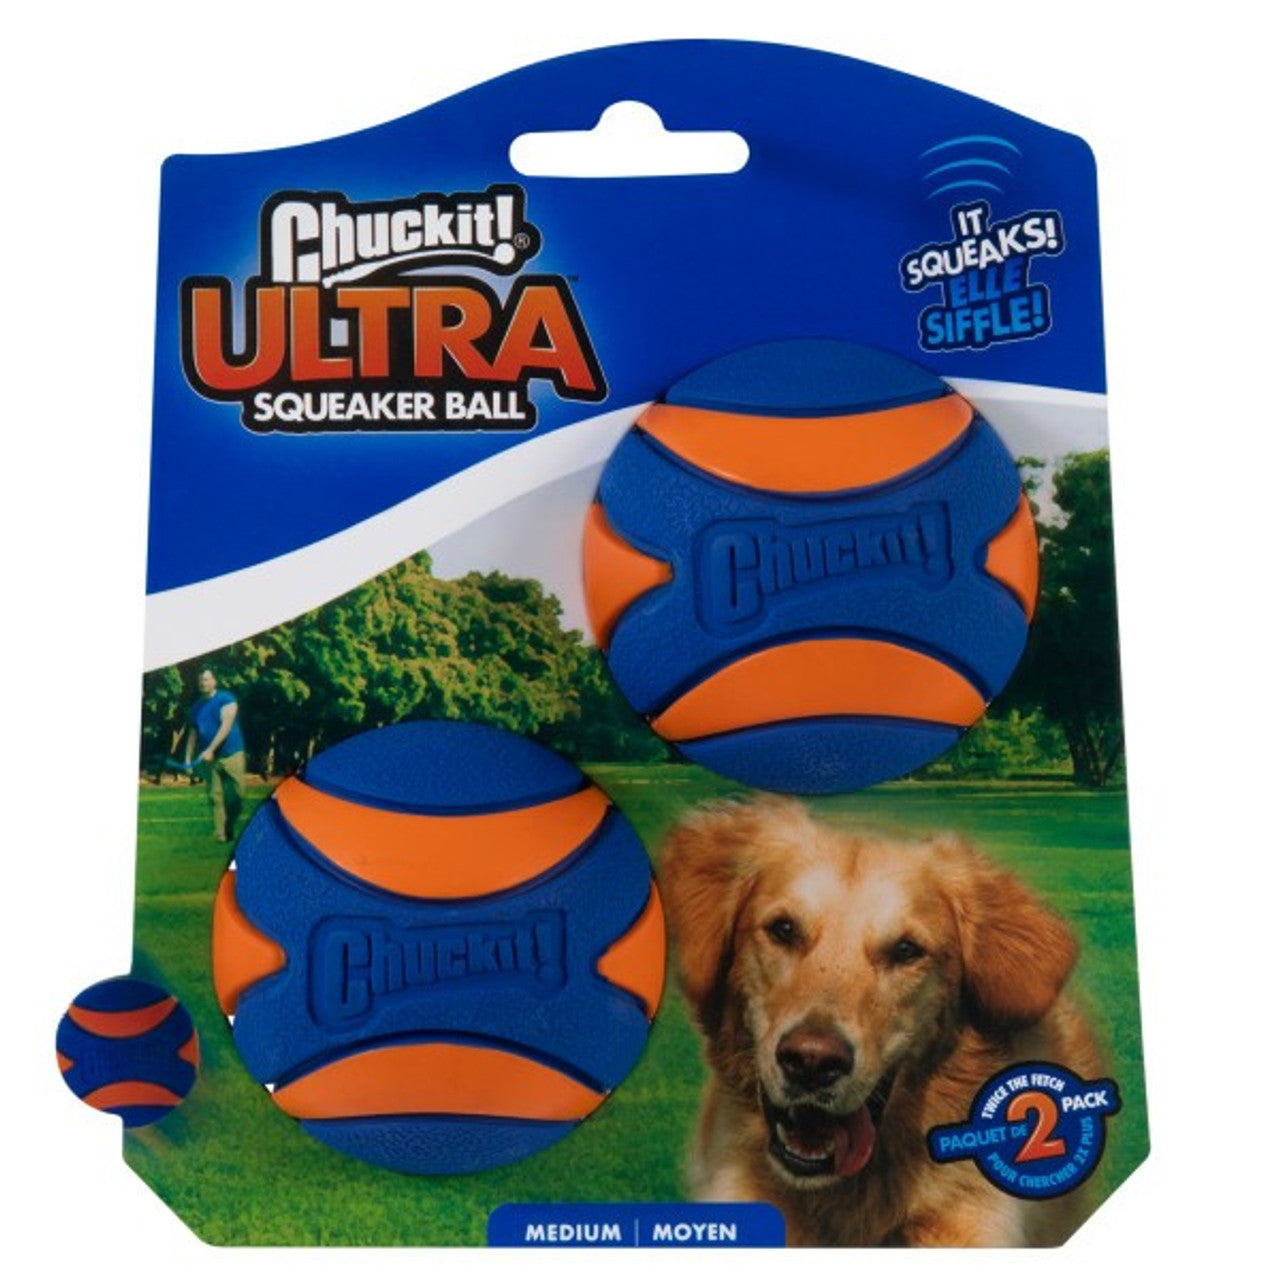 Chuckit! Ultra Squeaker Ball 2 Pack Medium 6.5cm